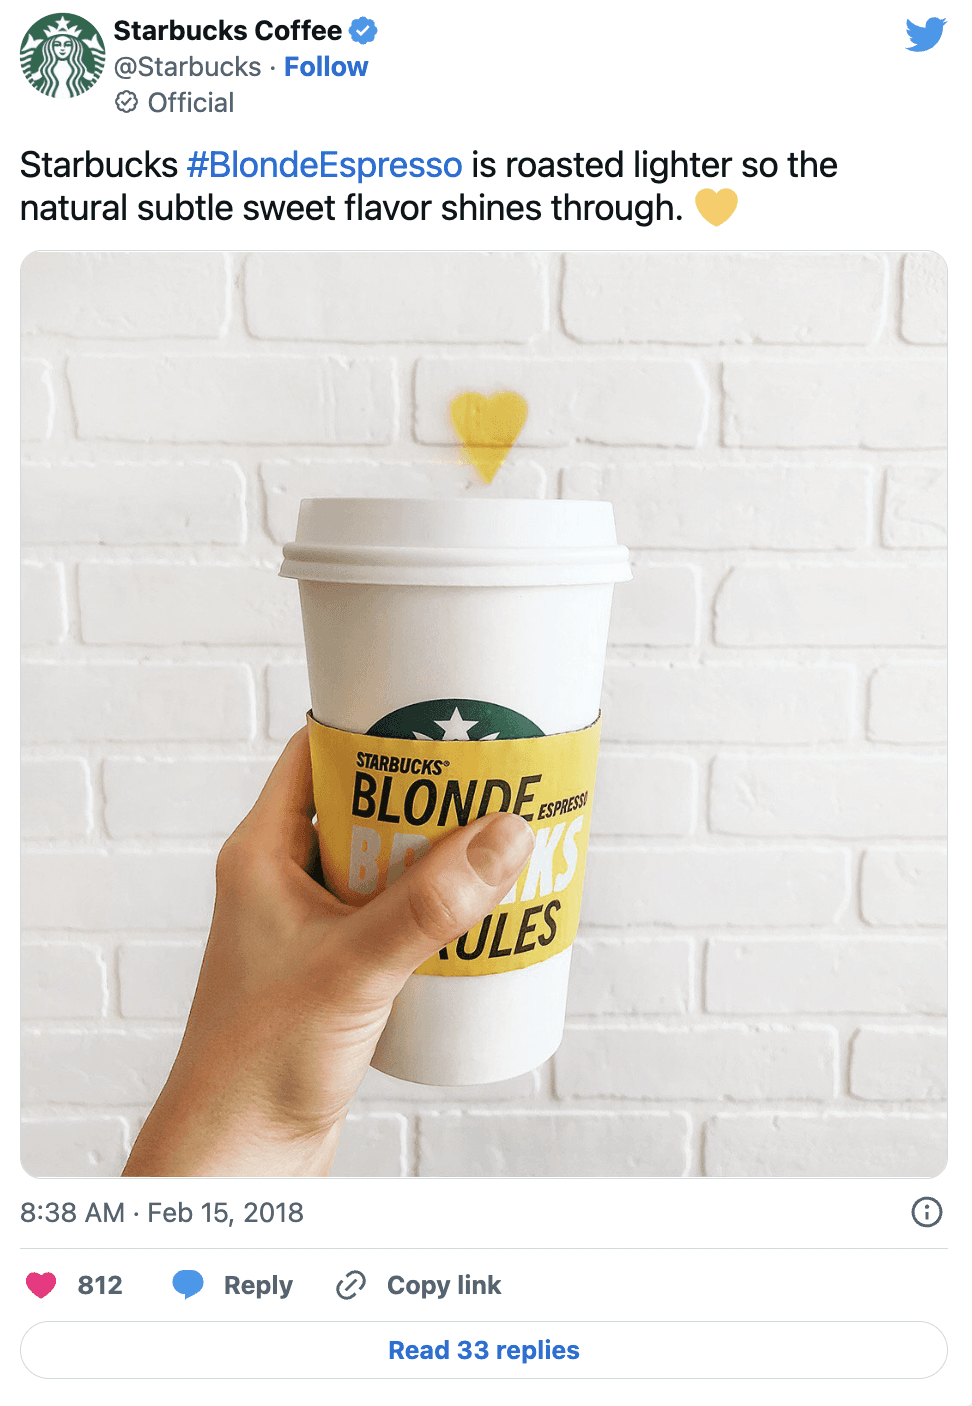 Twitter post regarding the new blonde espresso